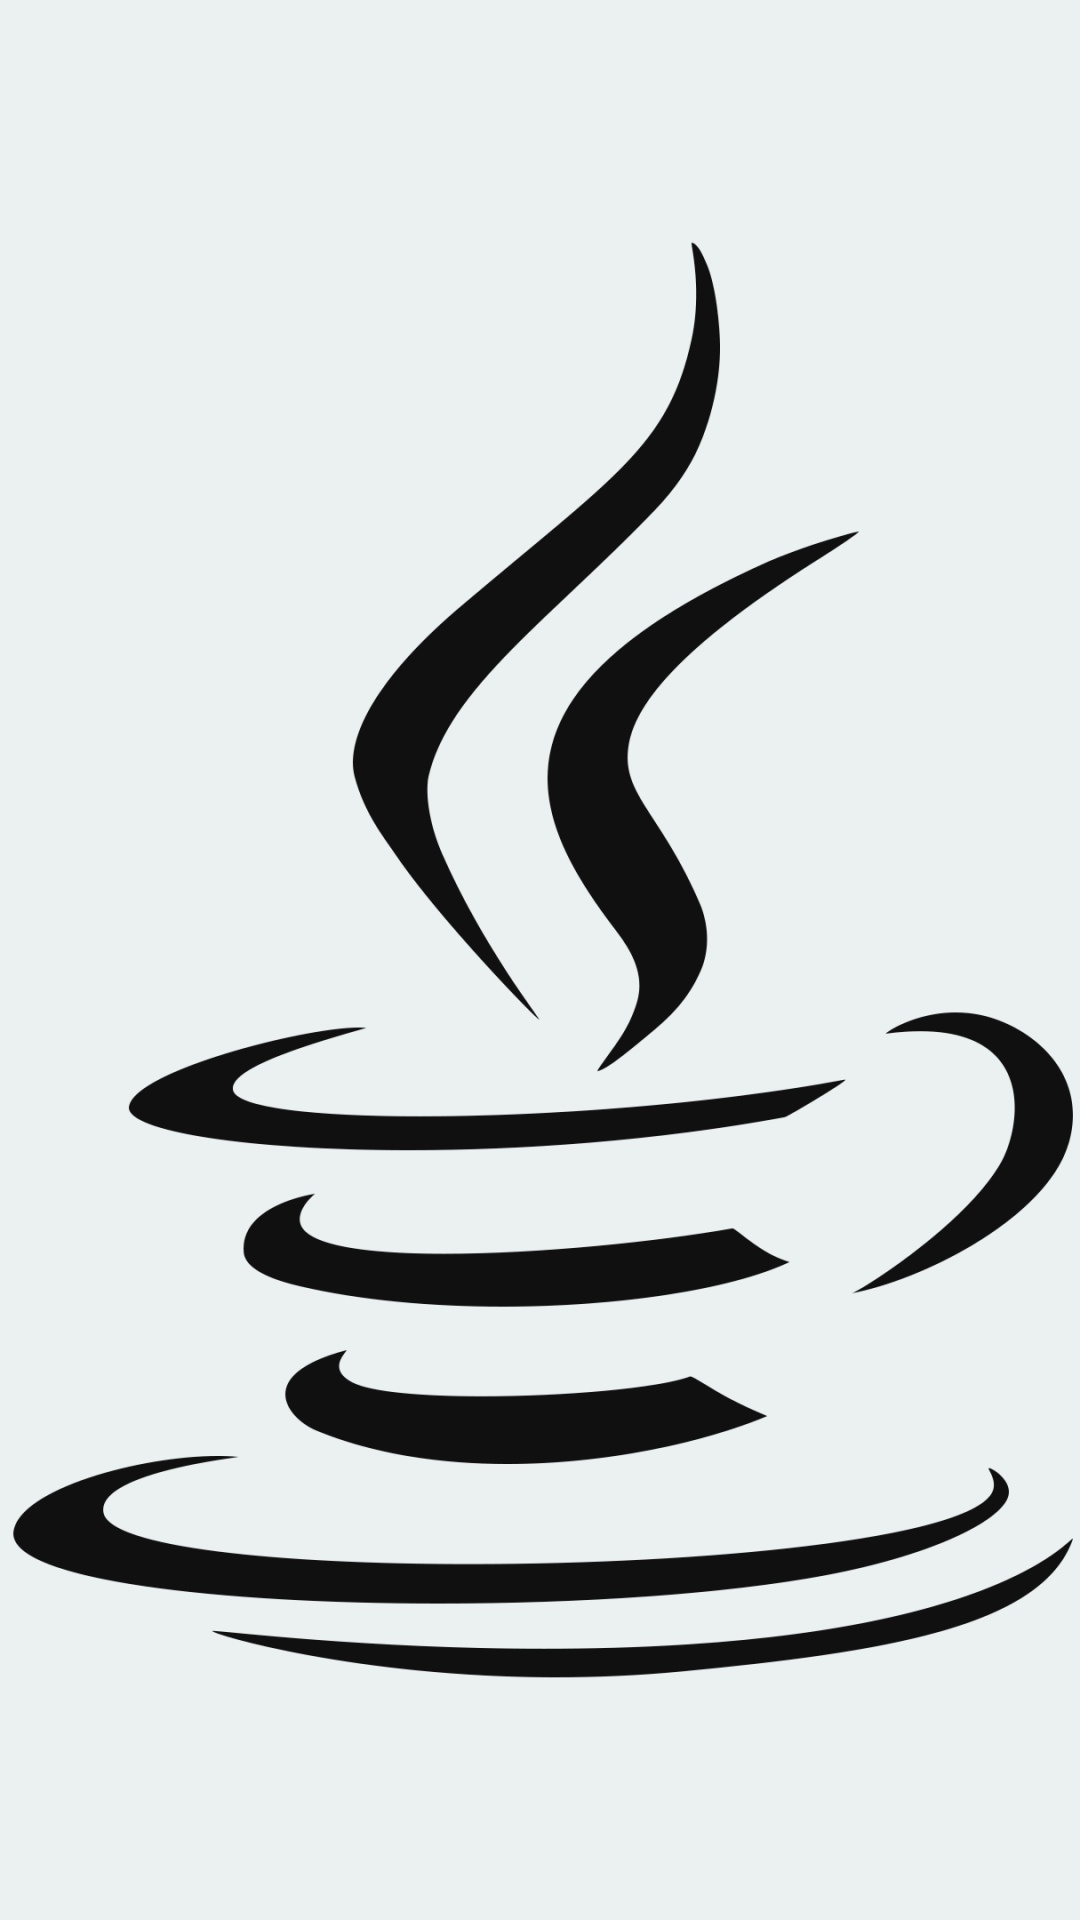 Java, Looking for Java Developers, Java Development Kit, Jakarta Ee, Api. Wallpaper in 1080x1920 Resolution